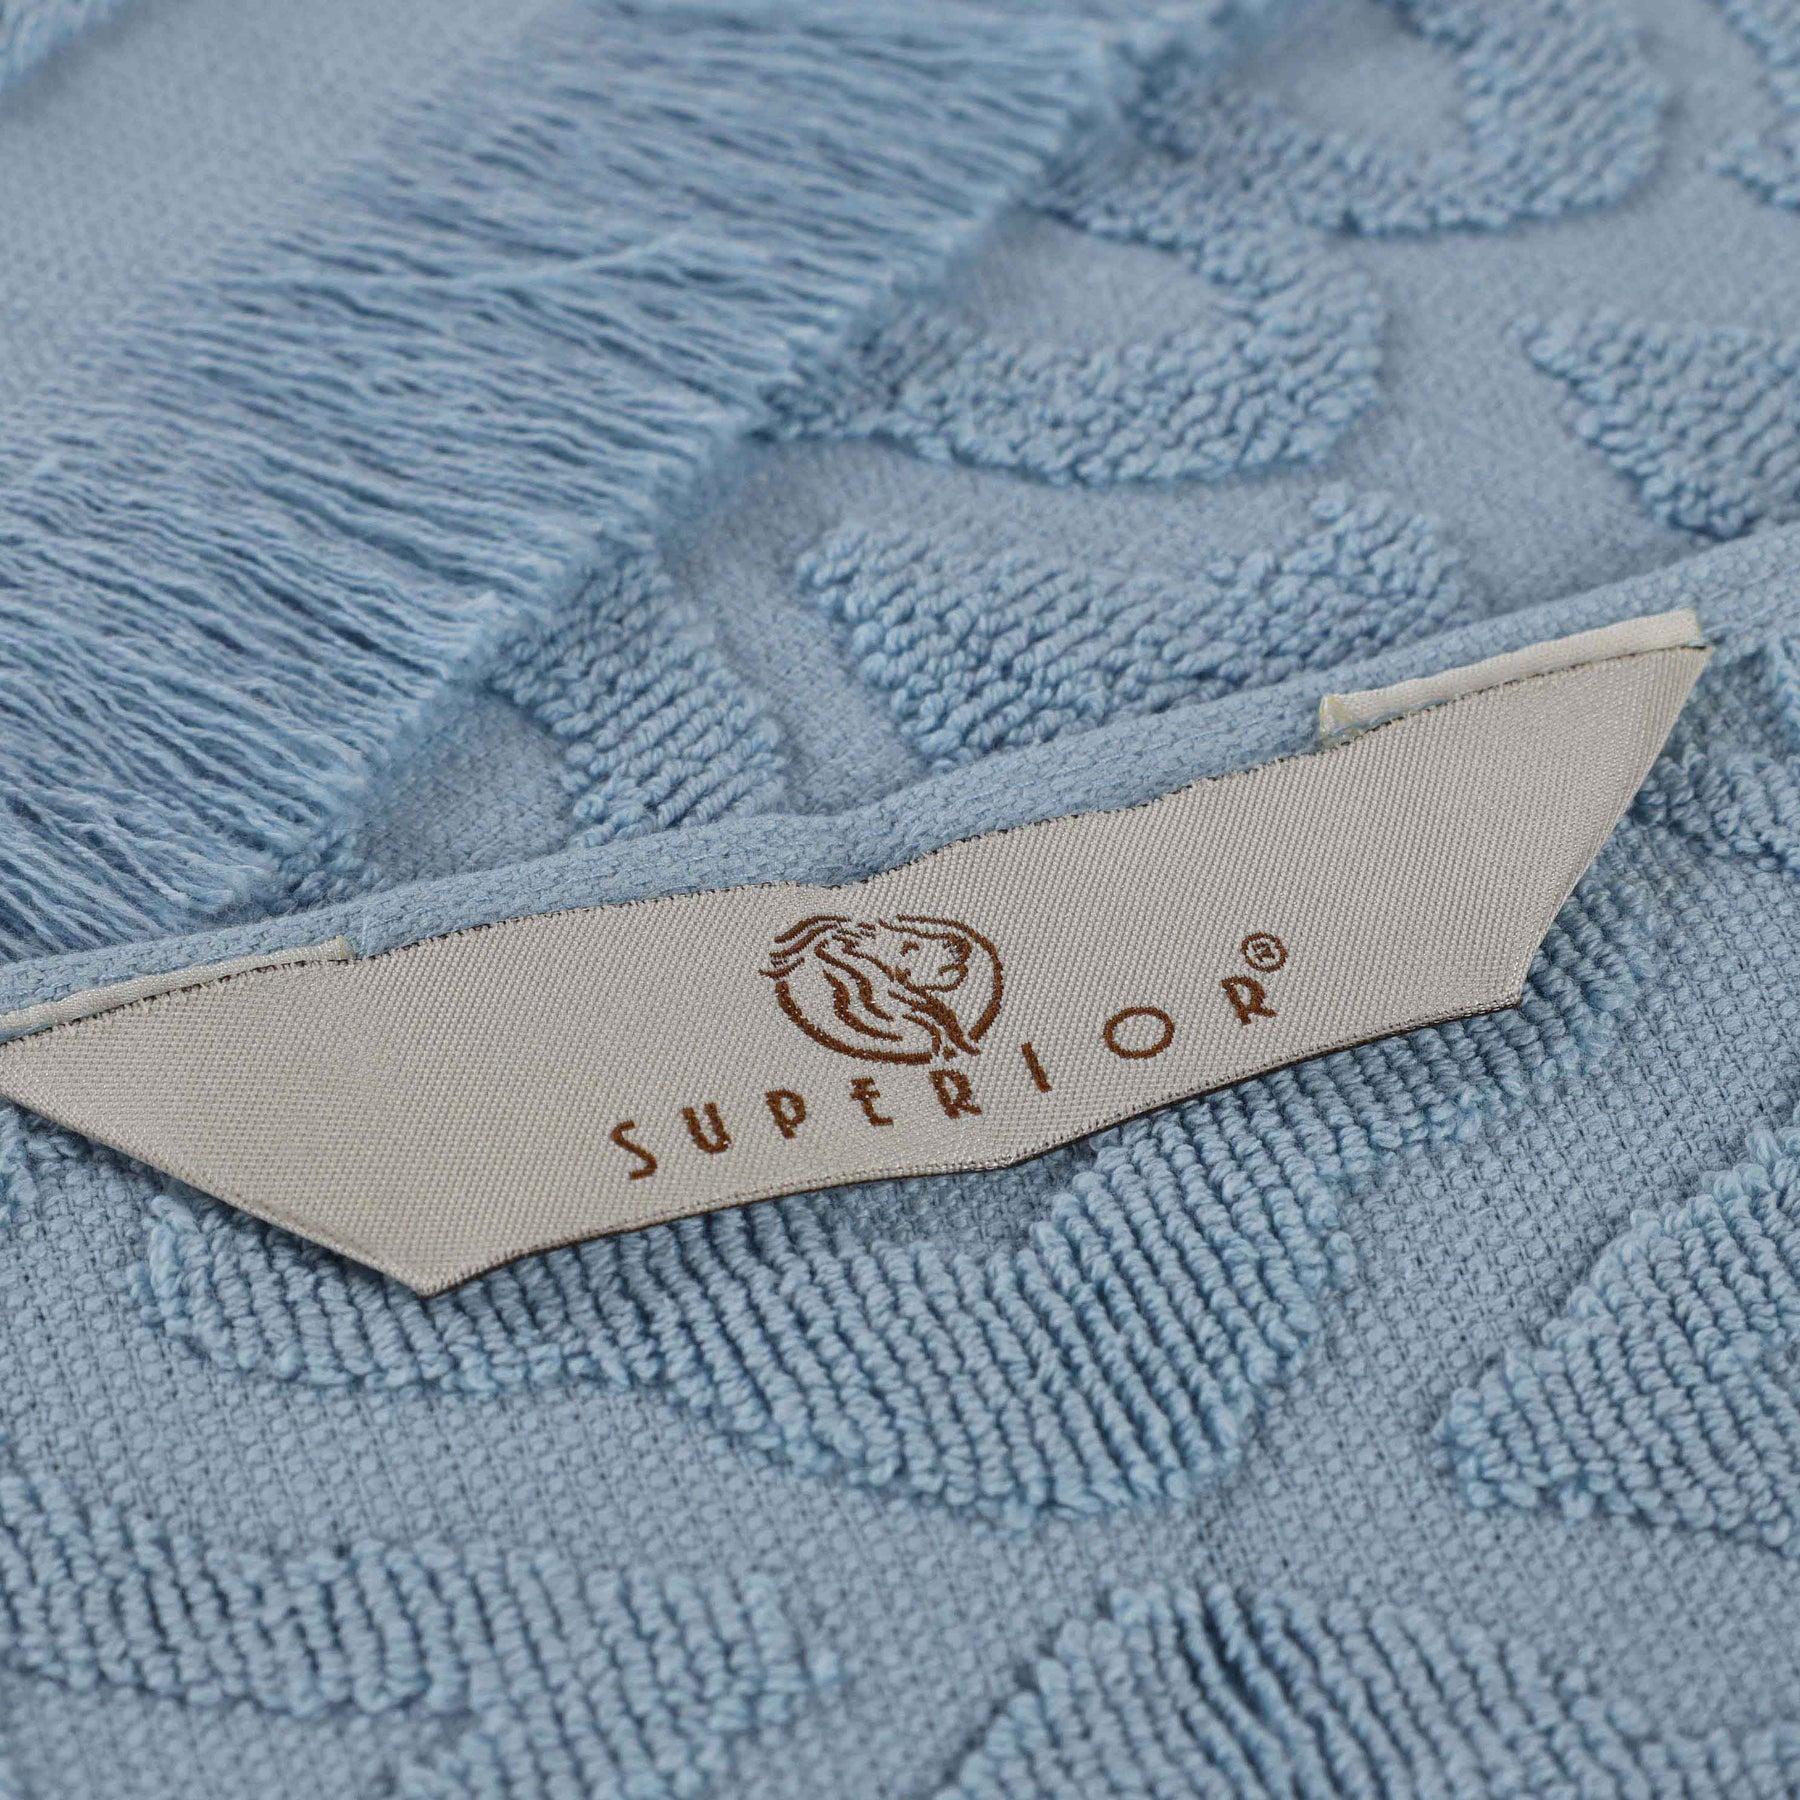 Rolla Cotton Geometric Jacquard Plush Face Towel Washcloth - Blue